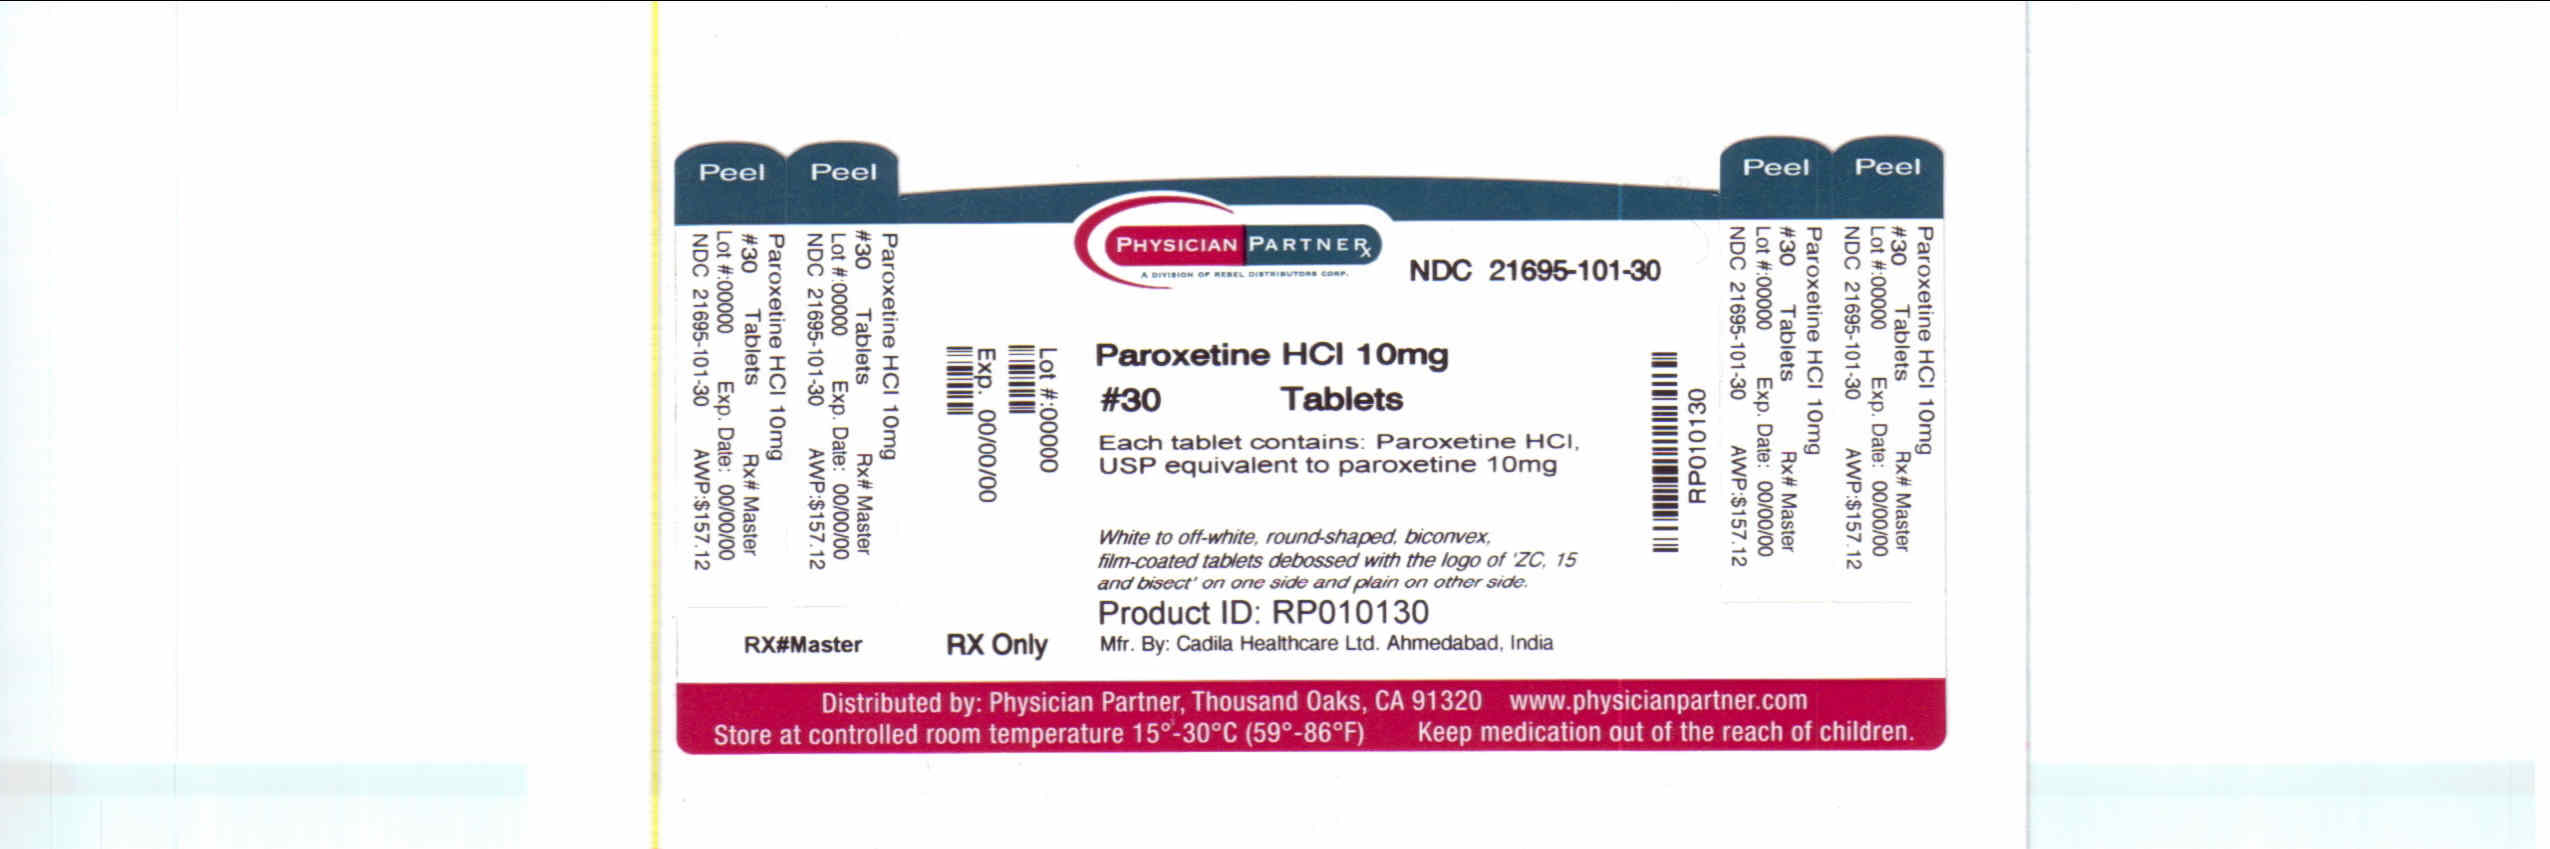 Paroxetiine HCL 10mg